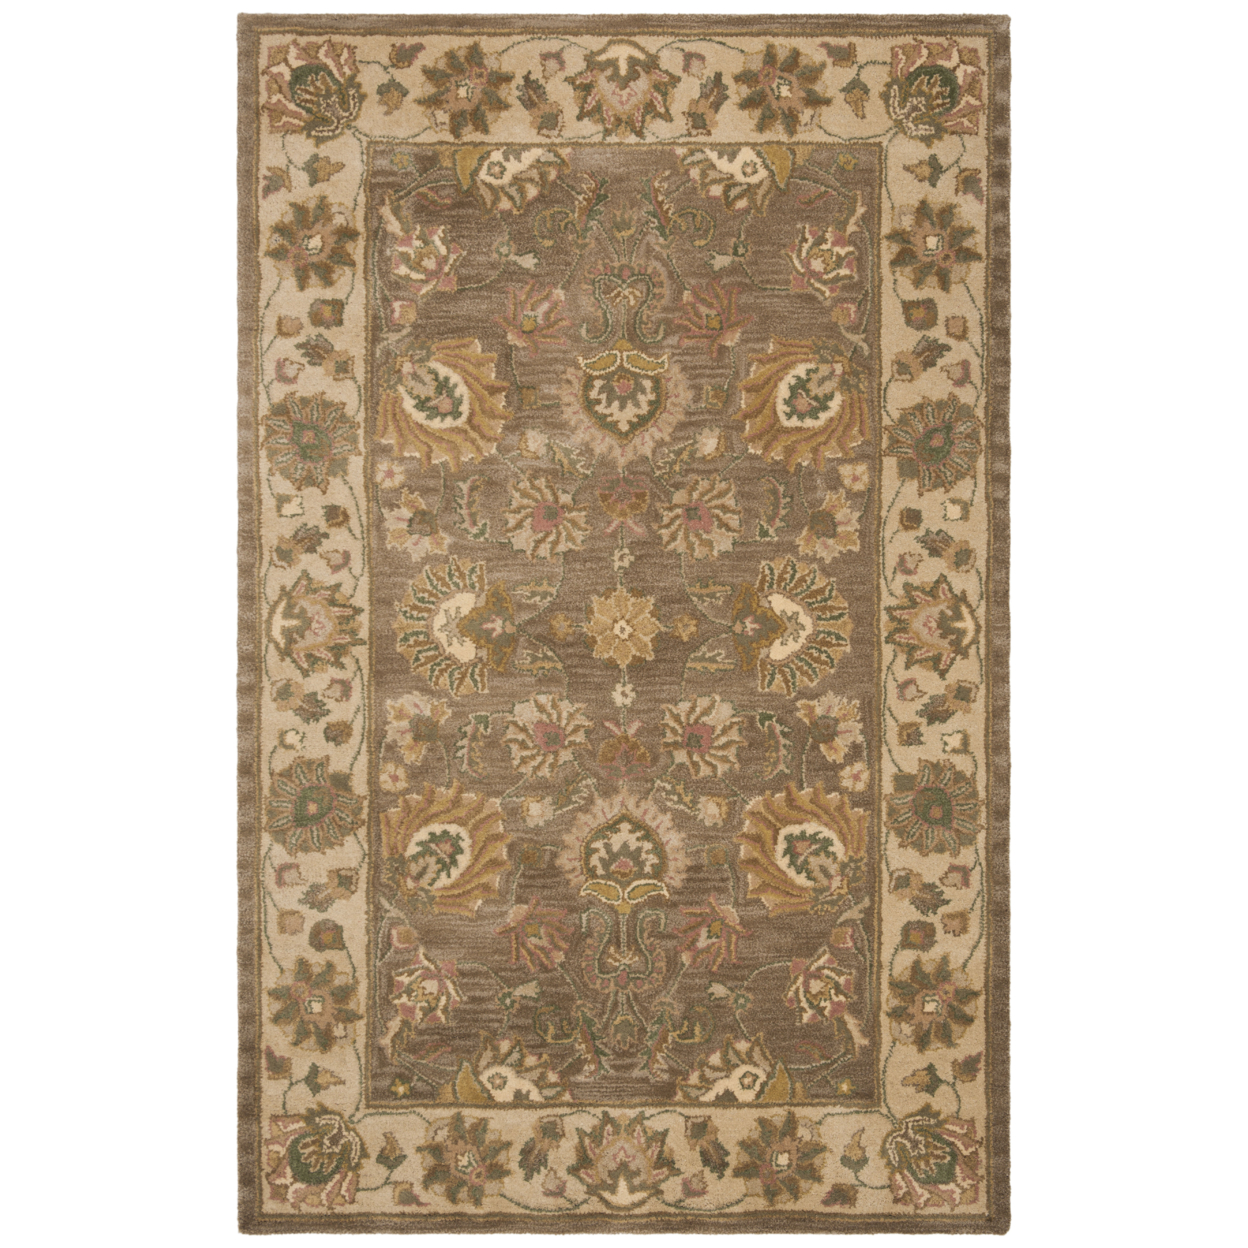 SAFAVIEH Heritage Regis Traditional Wool Area Rug, Brown/Ivory, 4'6" x 6'6" Oval - image 1 of 9